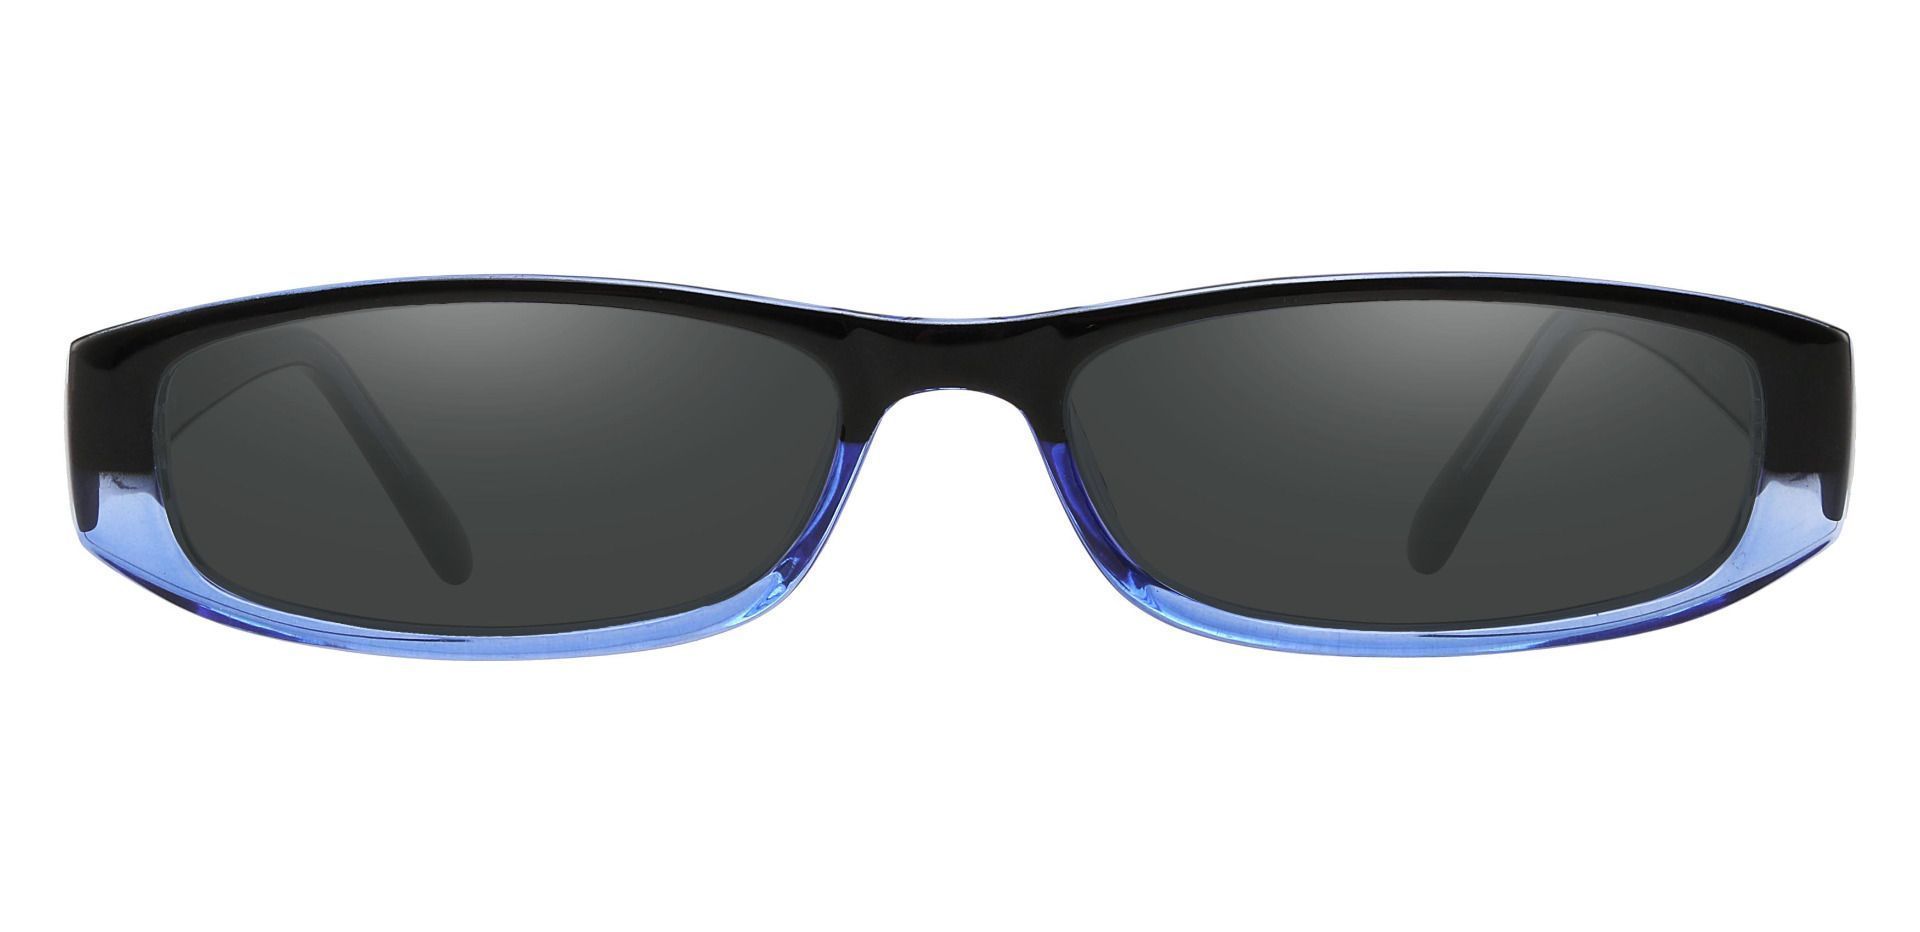 Elgin Rectangle Single Vision Sunglasses - Blue Frame With Gray Lenses